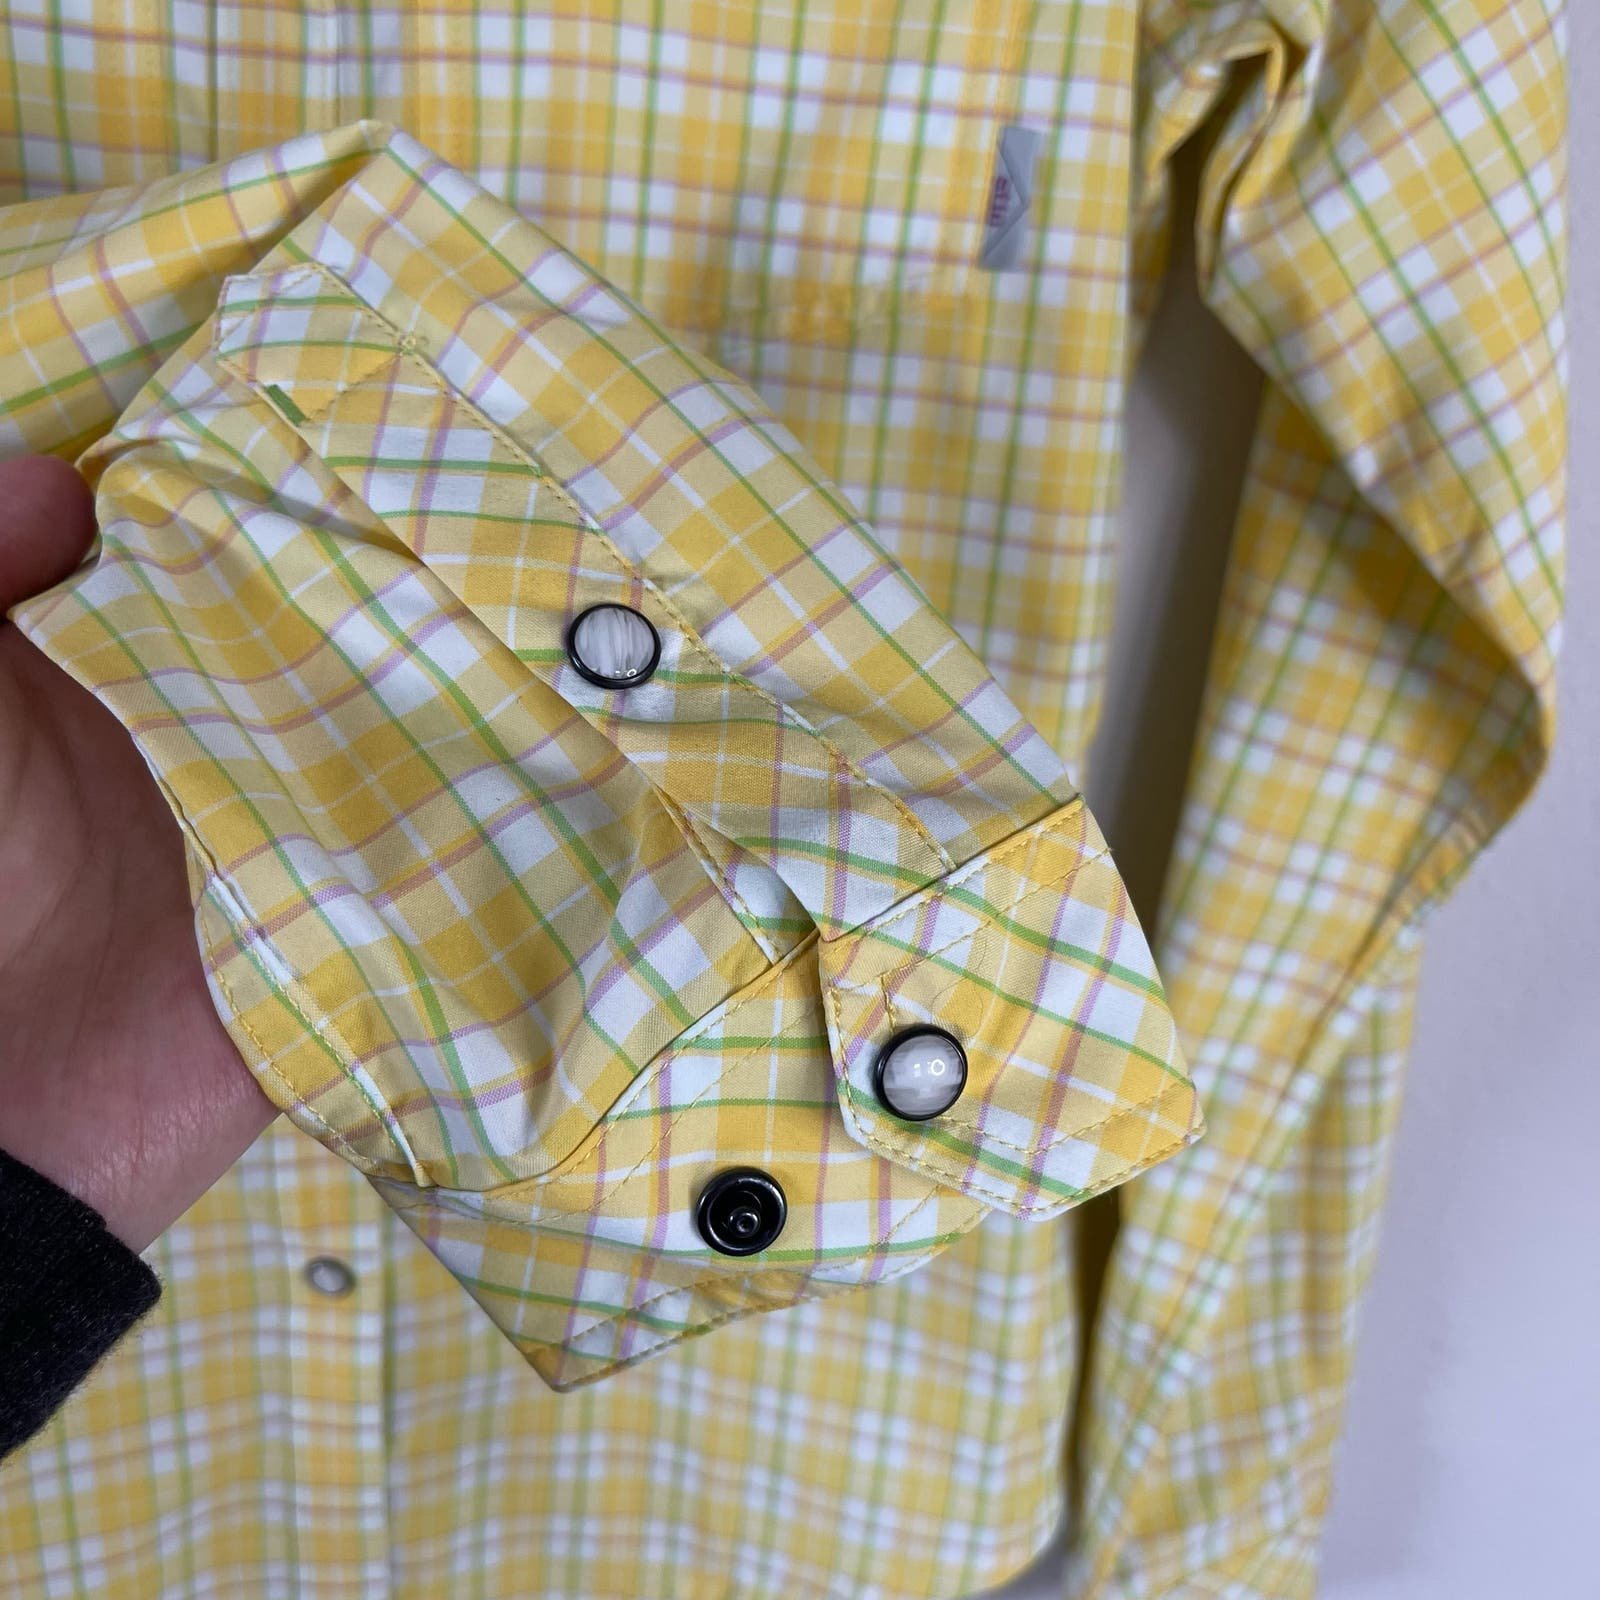 Stylish NWOT Stio Yellow Plaid Eddy Long Sleeve Shirt (Size XS) JFyJGws7G New Style